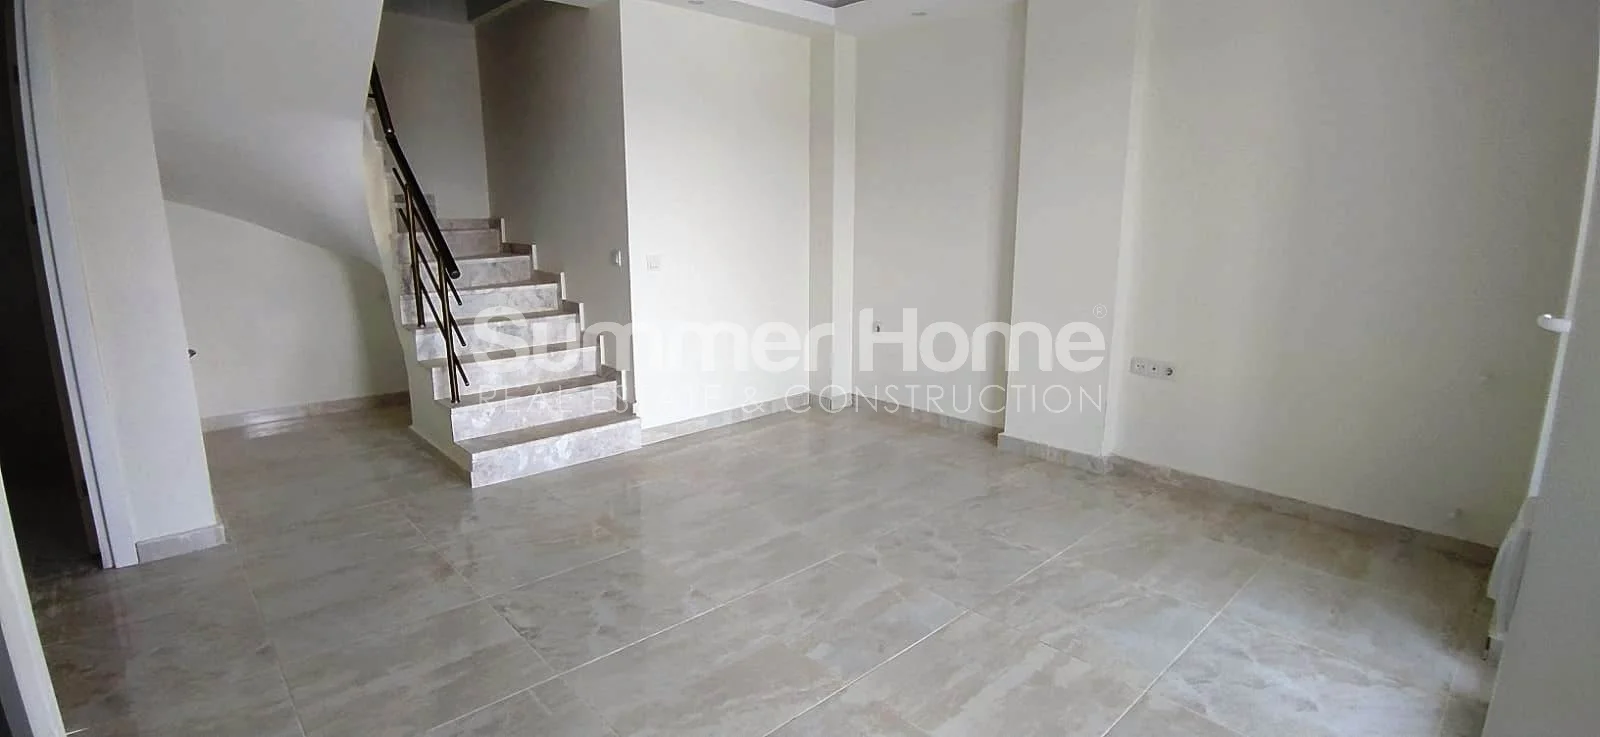 Two-bedroom duplex apartment offering sea view in Gulluk, Bodrum Interior - 4